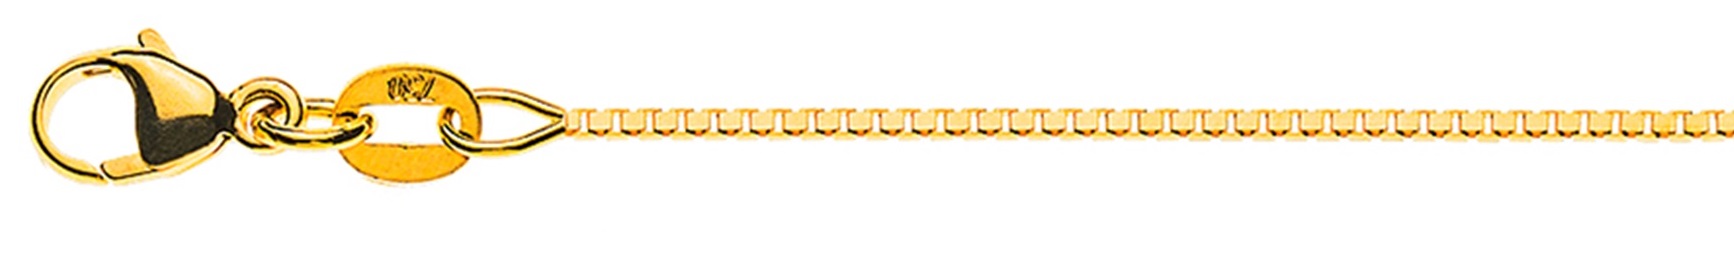 AURONOS Style Necklace yellow gold 9K Venetian chain diamond 42cm 0.9mm